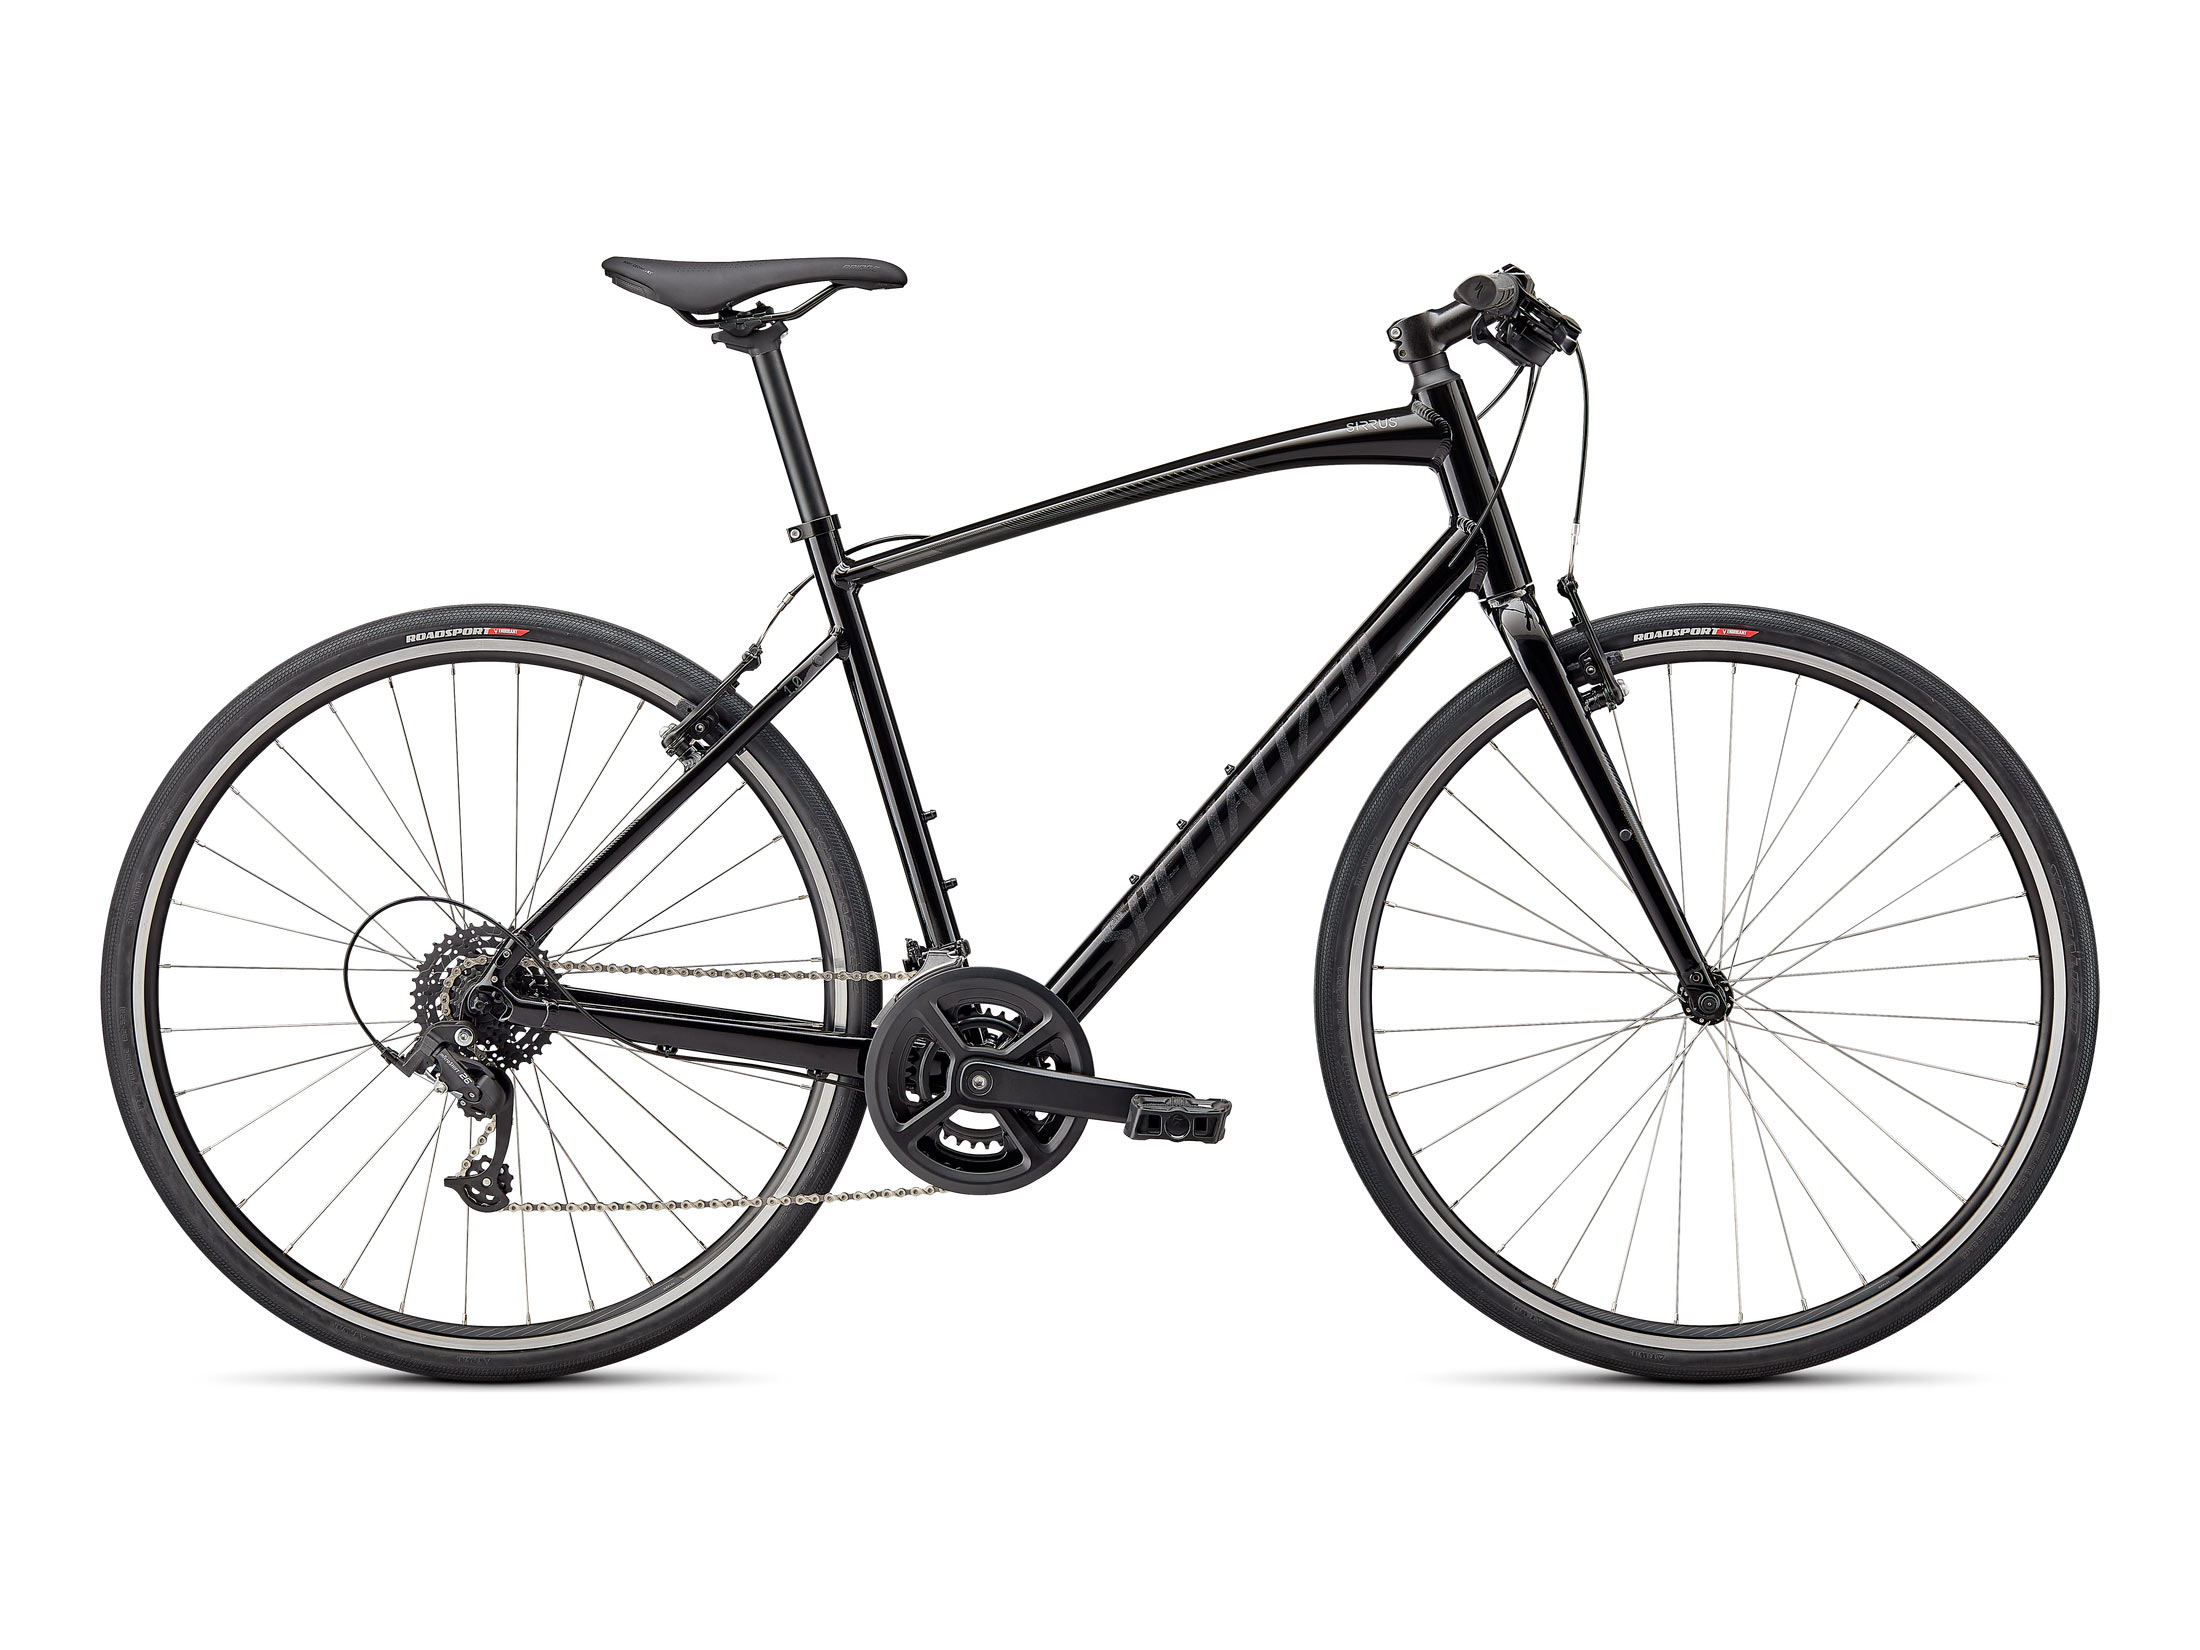 Specialized Sirrus 1.0 Bike - Gloss Black / Charcoal / Satin Black Reflective